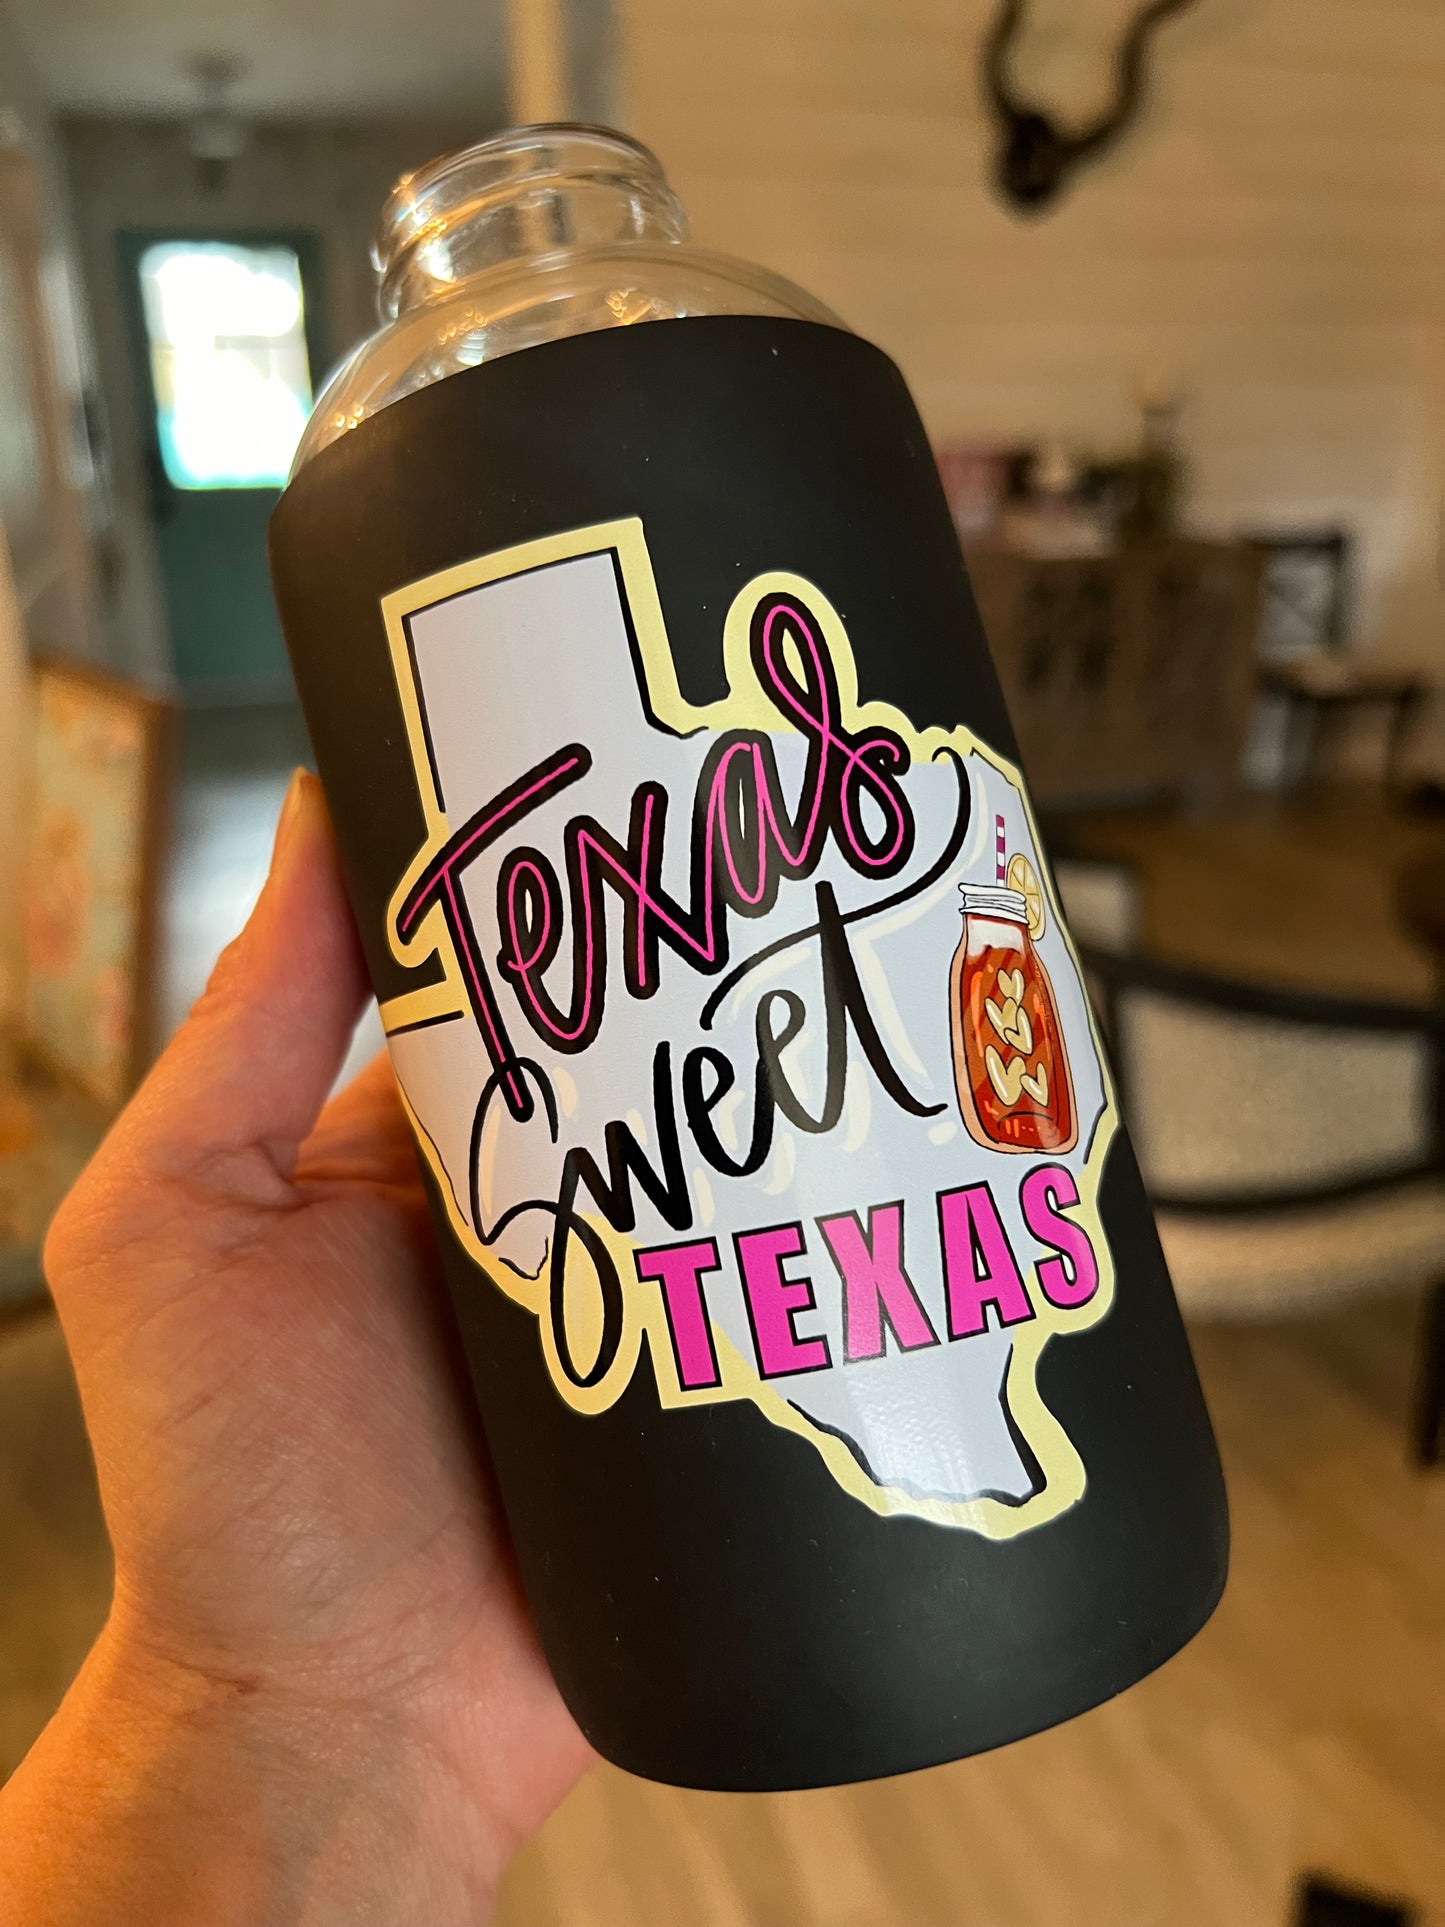 Texas Sweet Tea, Texas Sticker